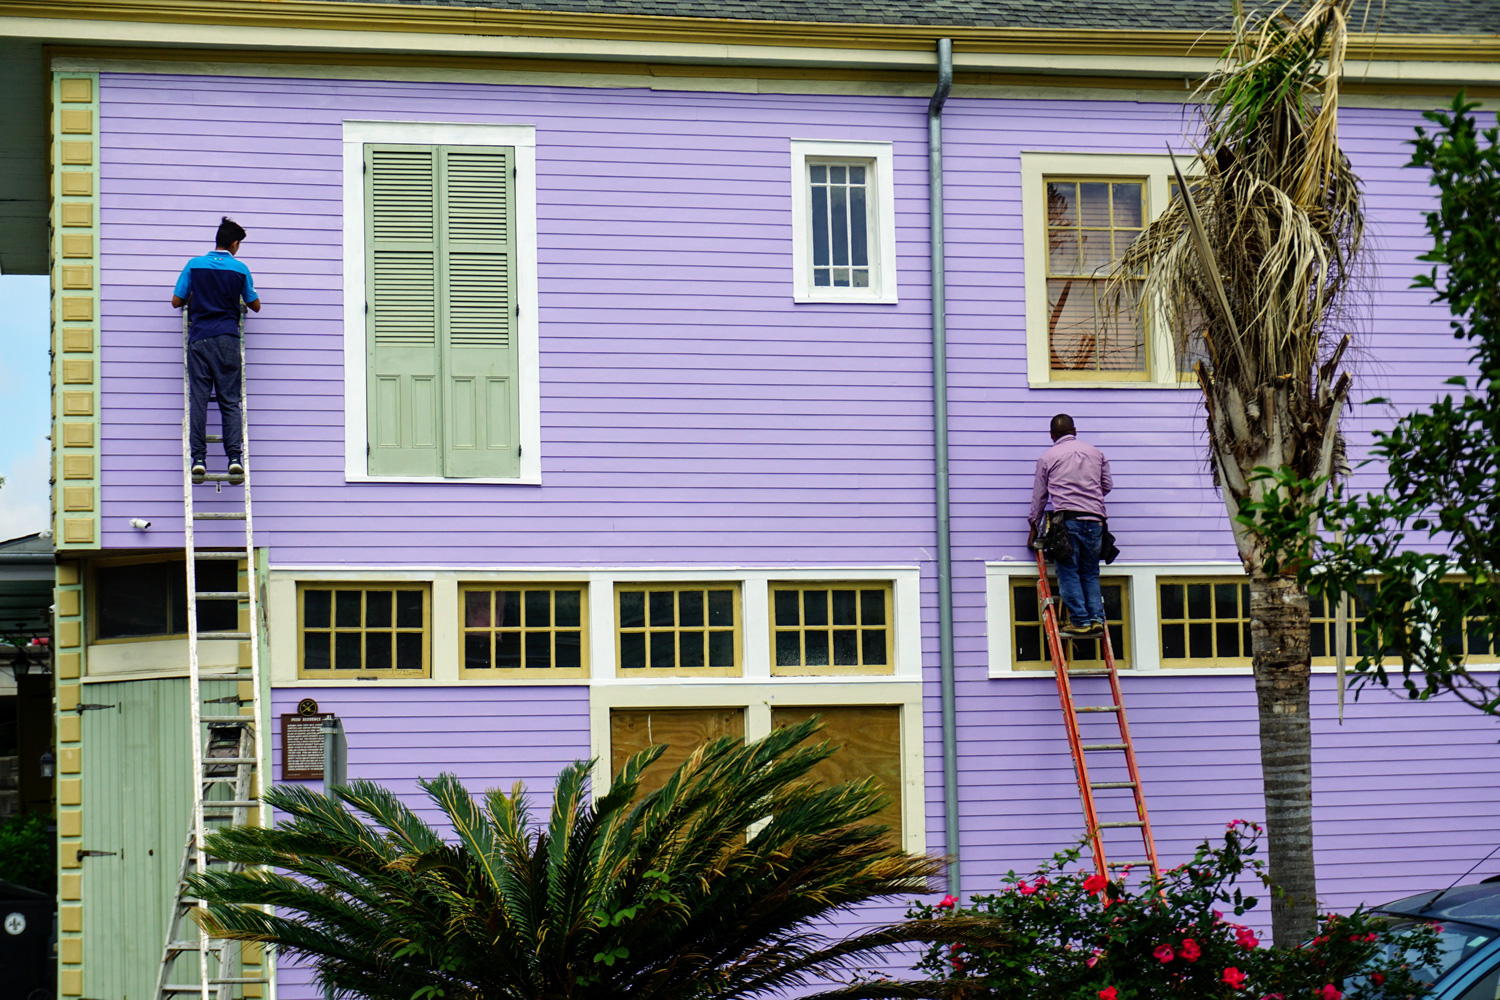 two men on ladders working outside a purple house